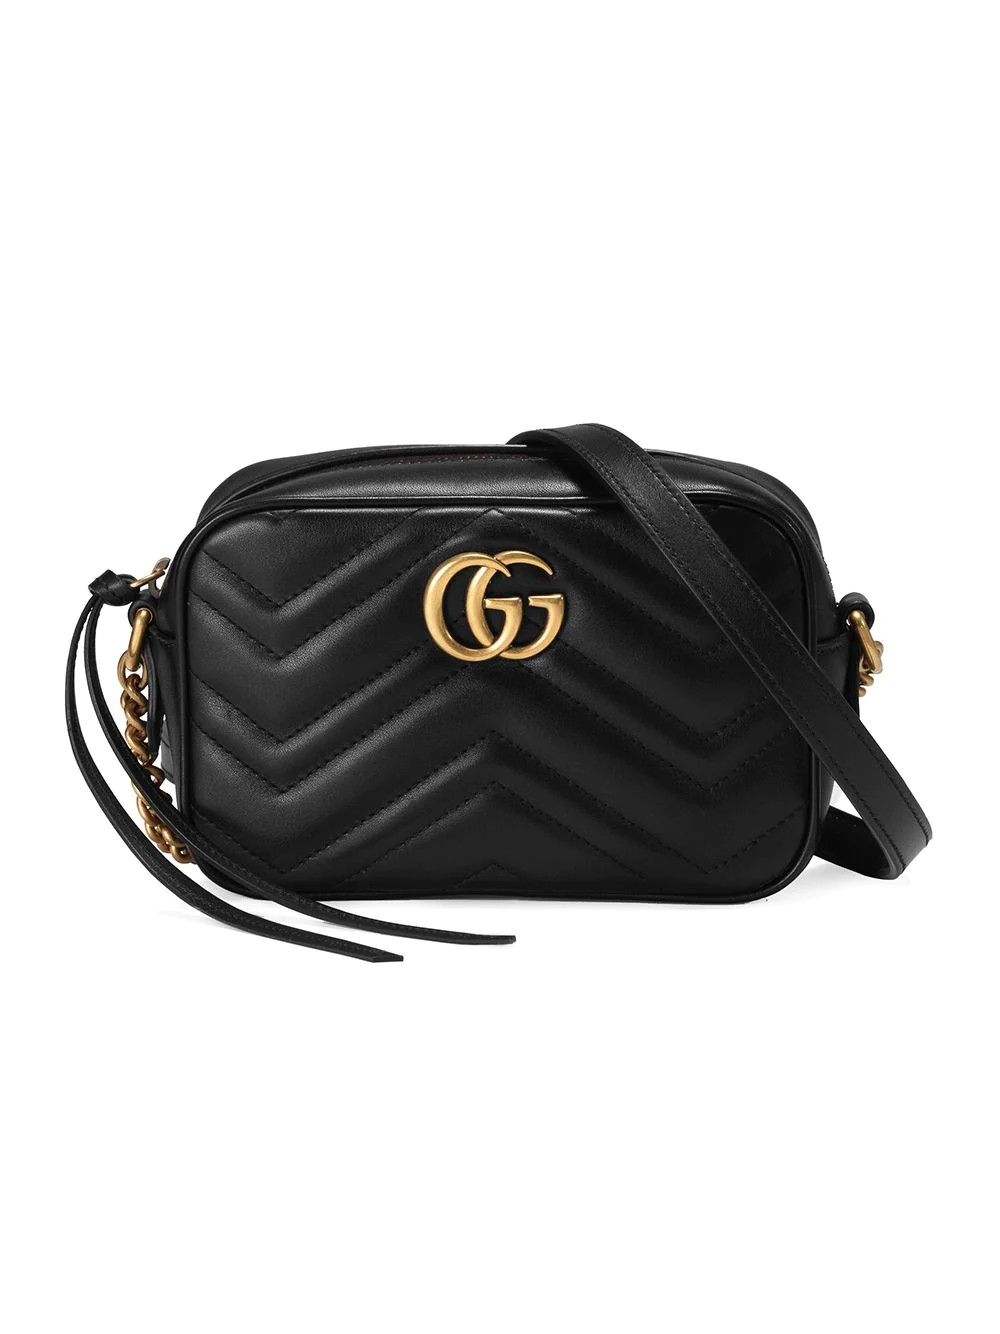 Gucci Marmont Mini Leather Bag